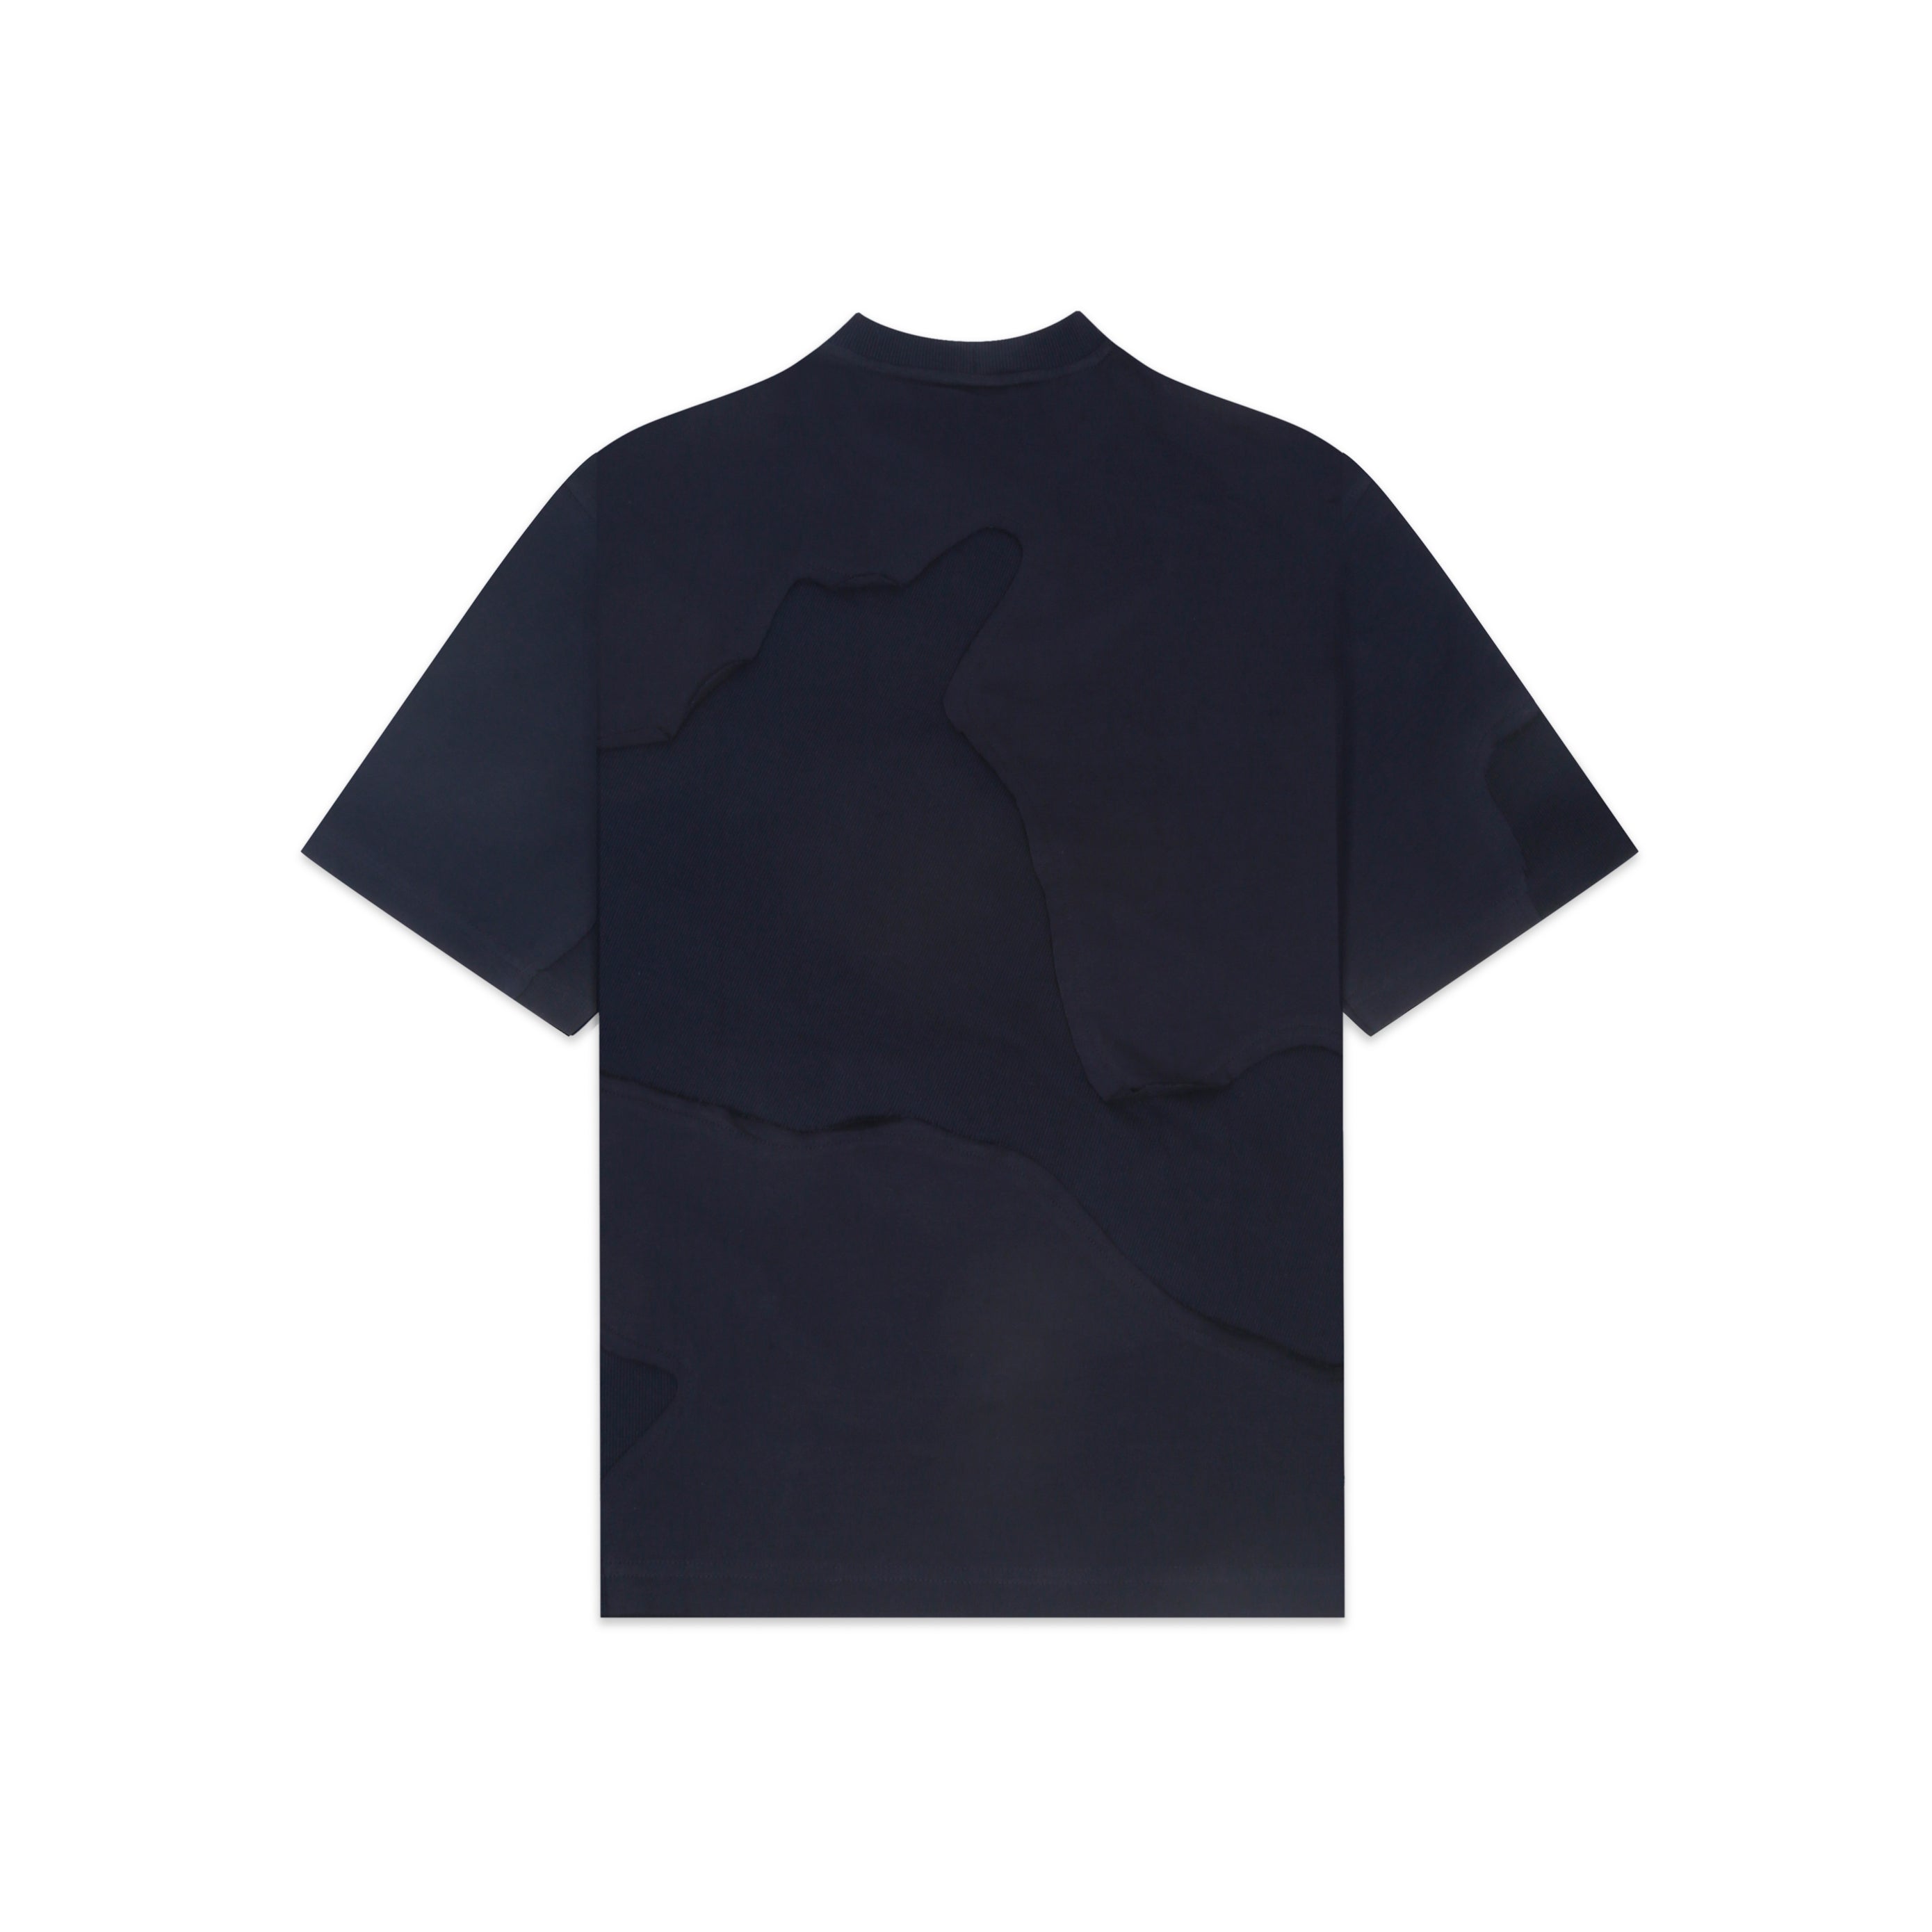 Ruff Cuts Navy Blue T-Shirt.